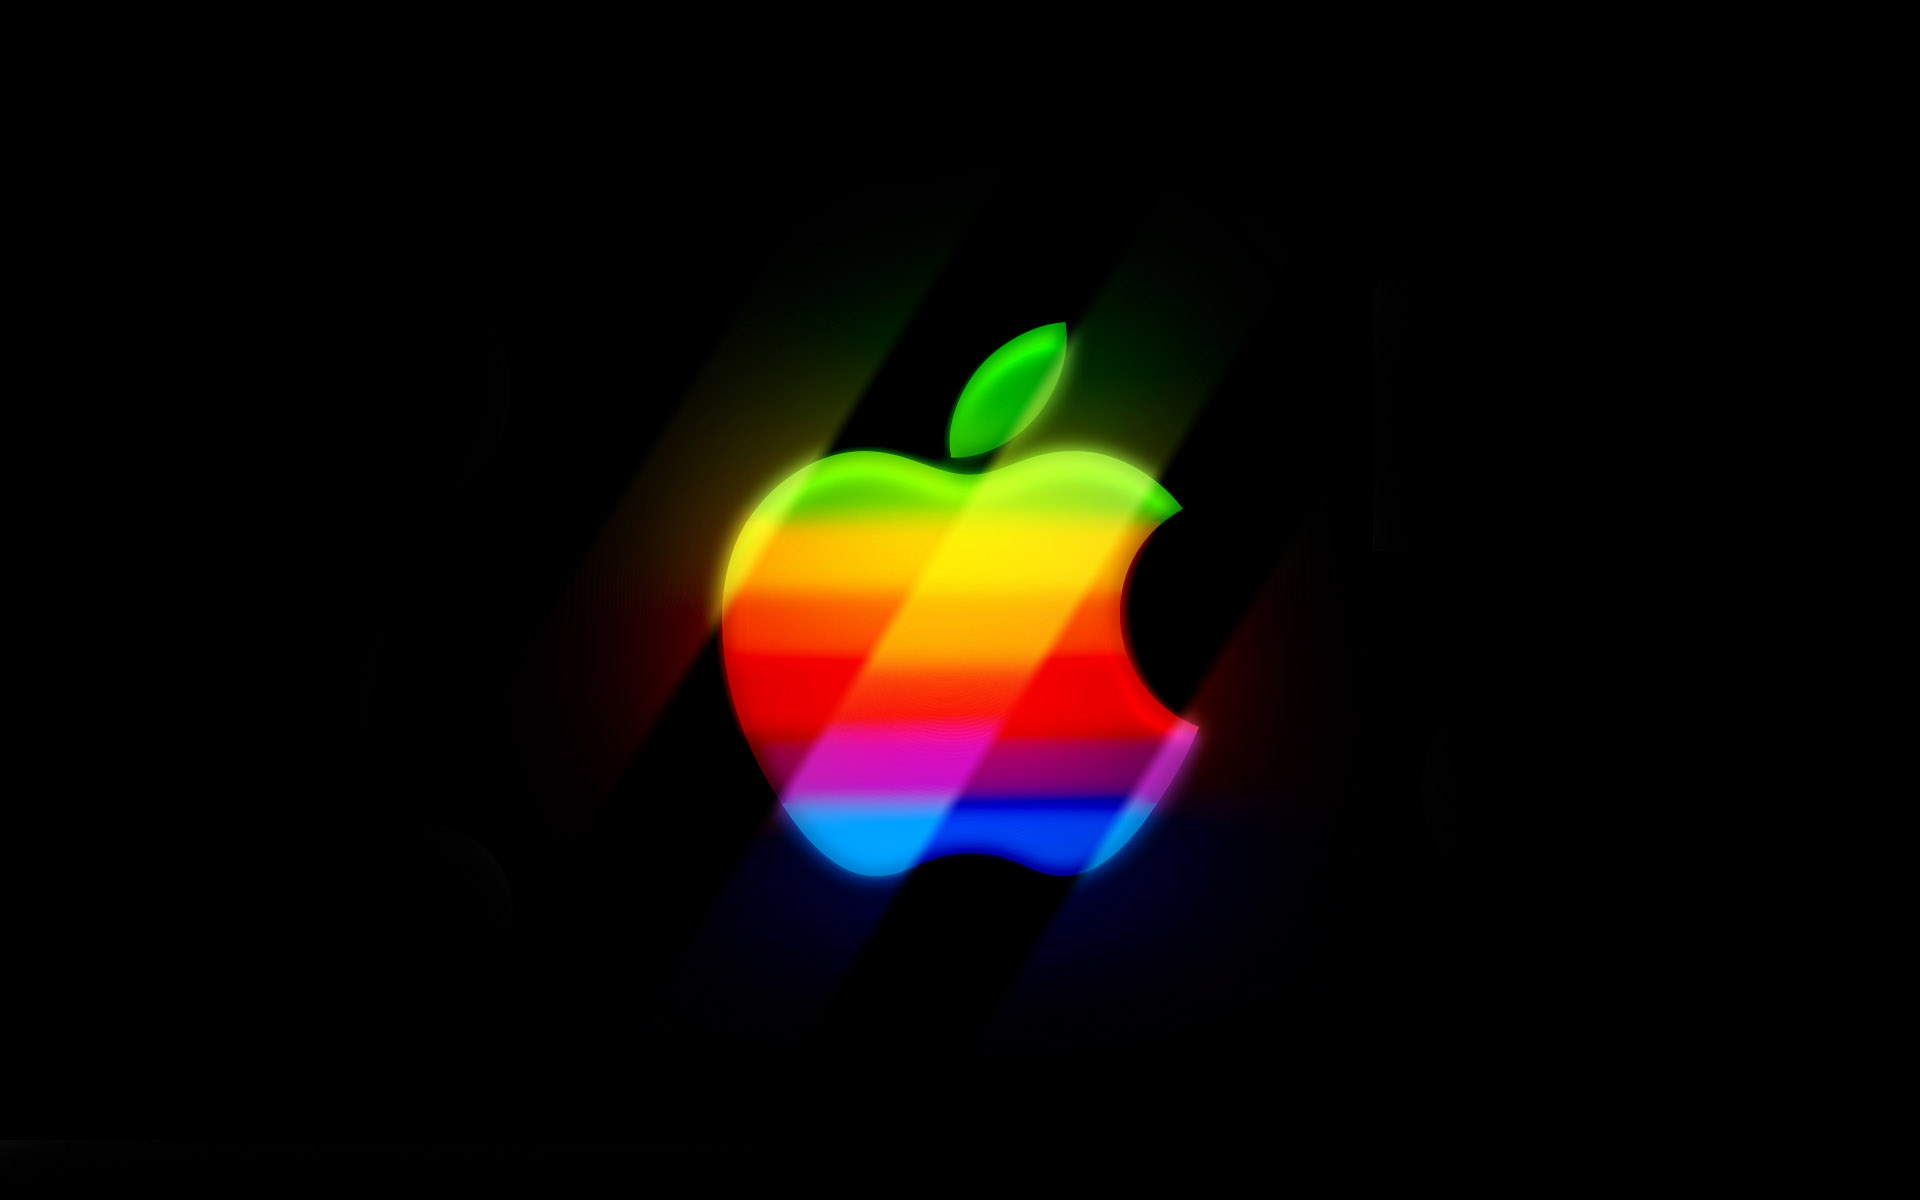 Apple mac